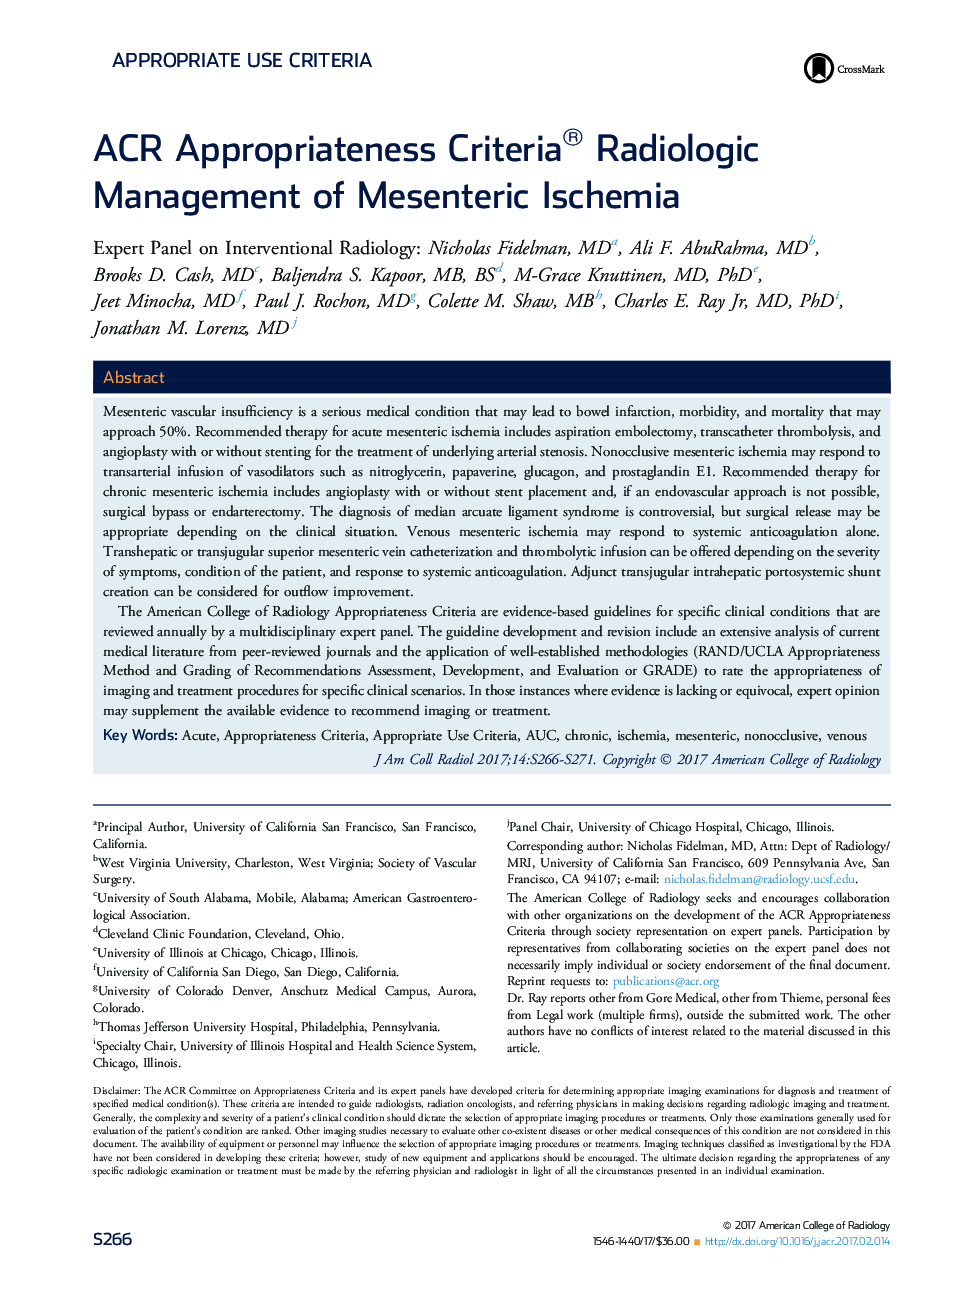 ACR Appropriateness Criteria® Radiologic Management of Mesenteric Ischemia